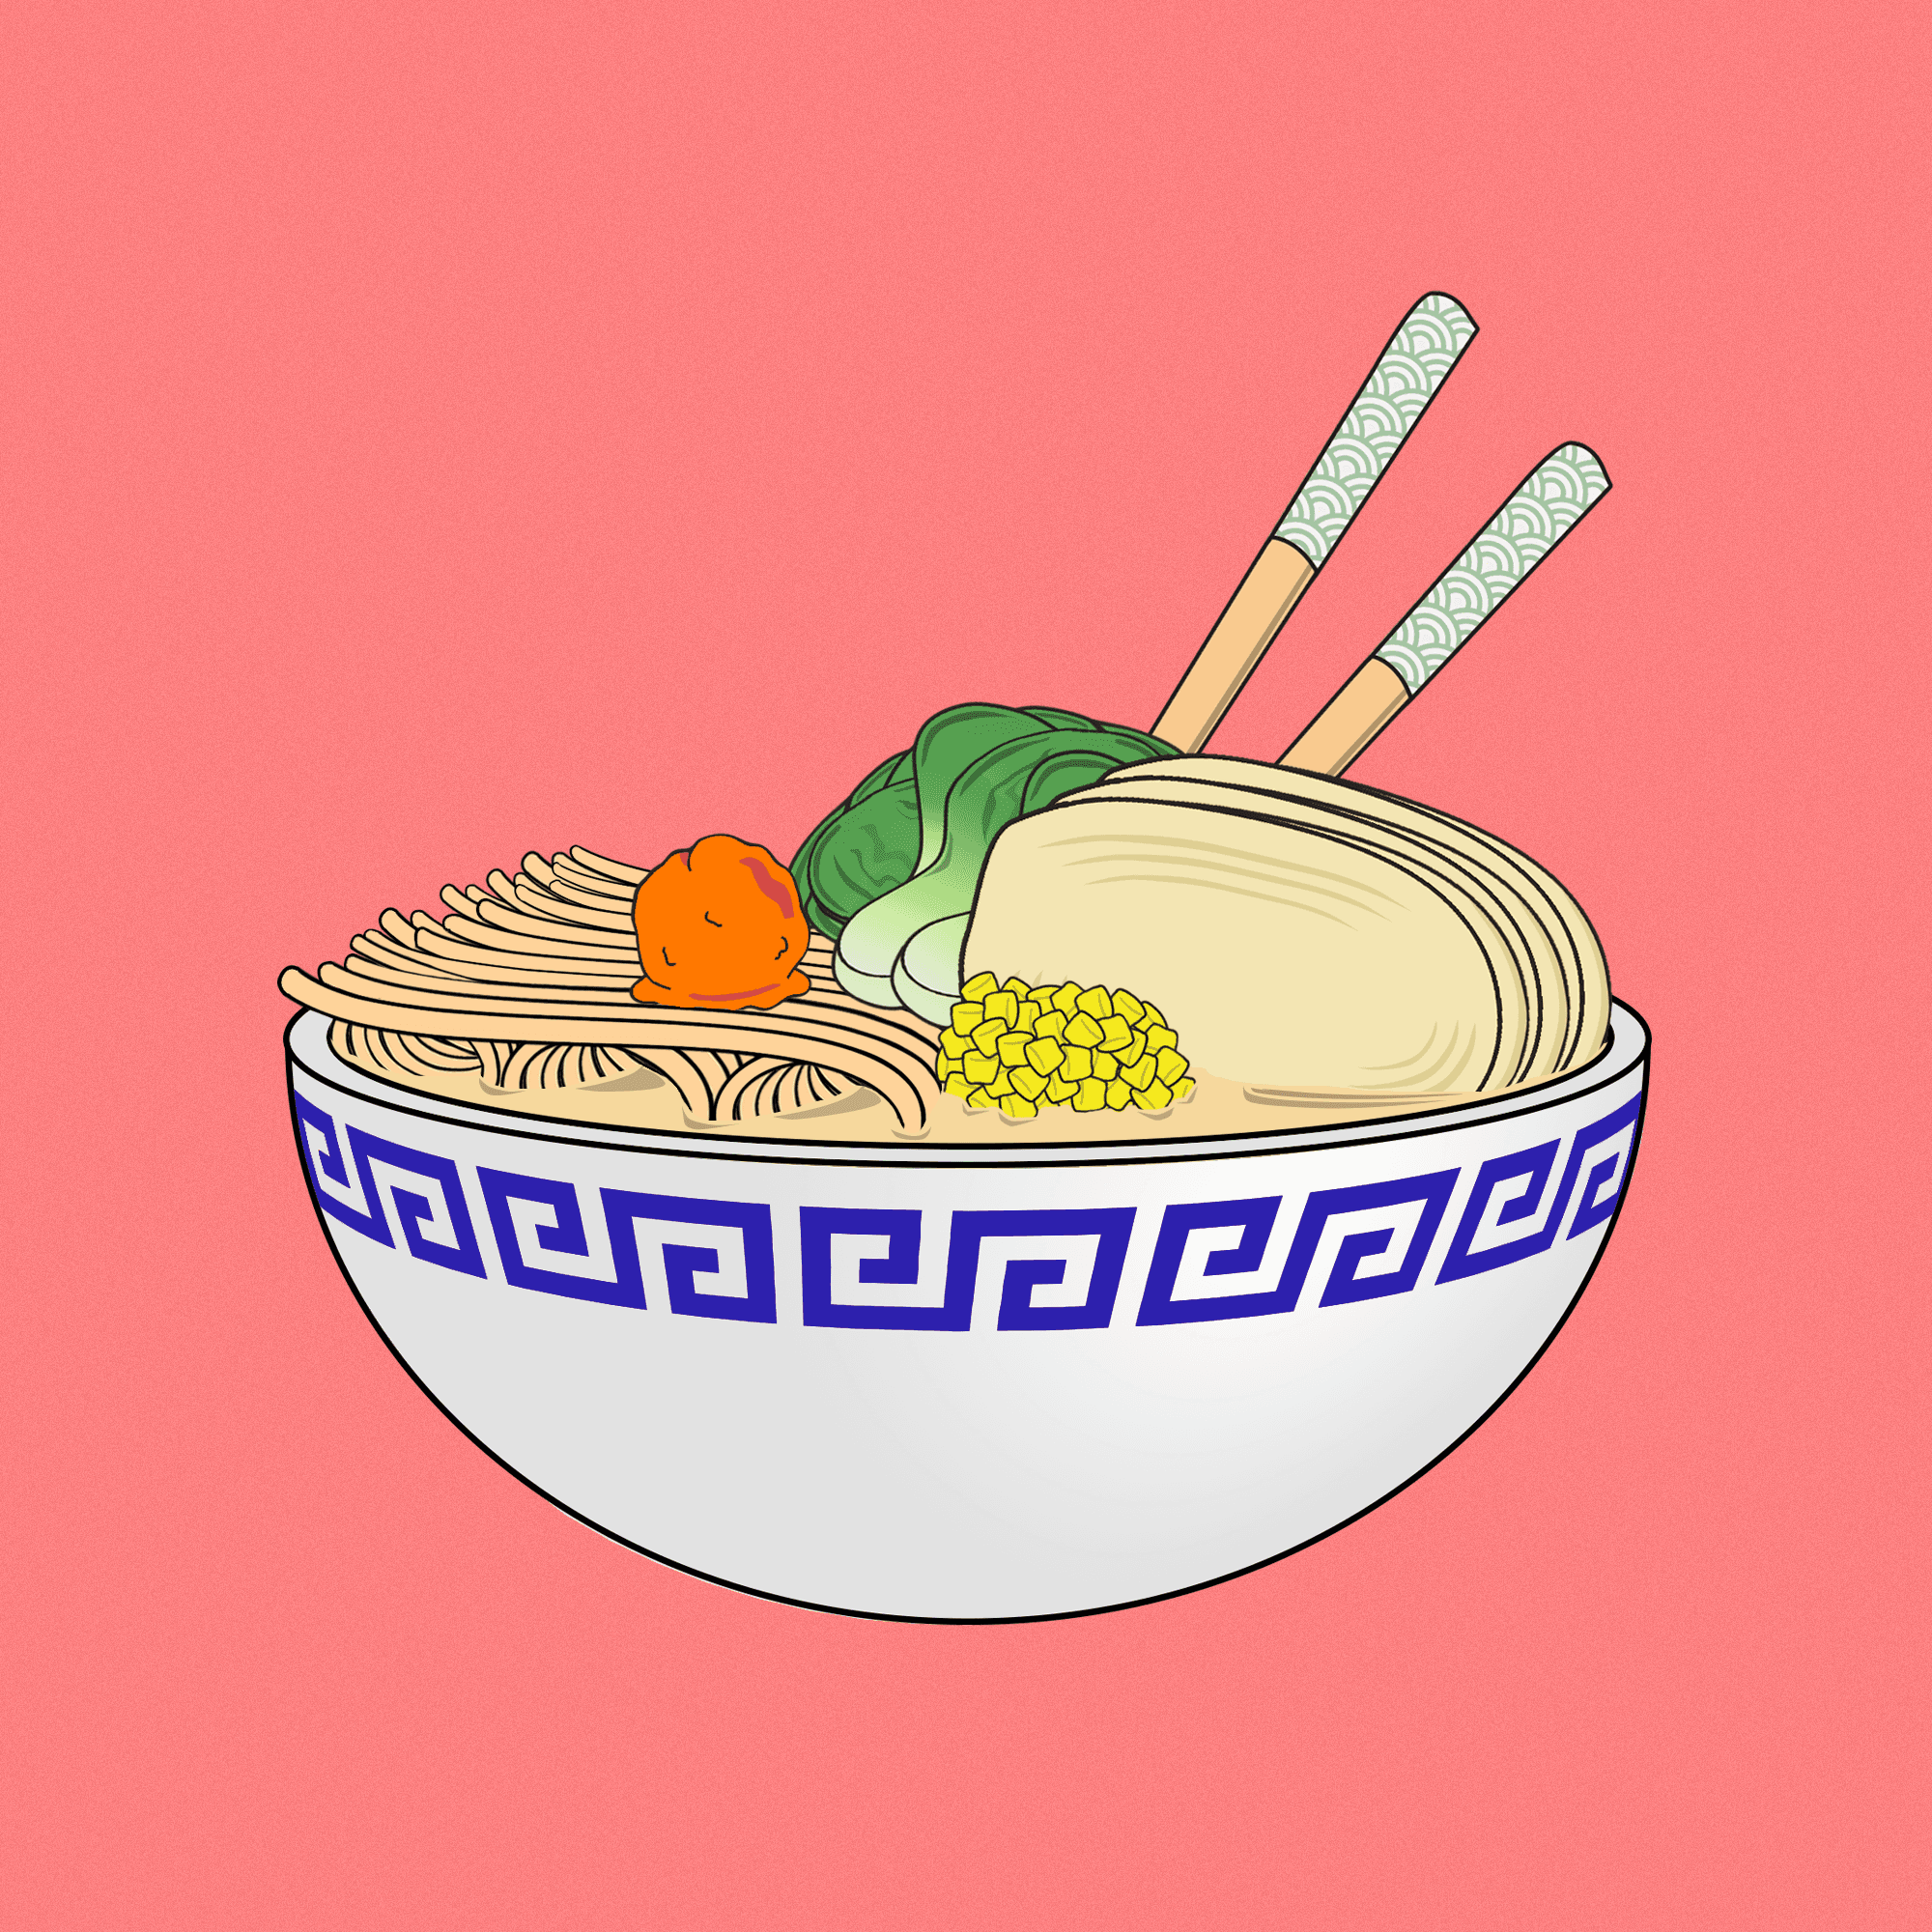 Noodl #40